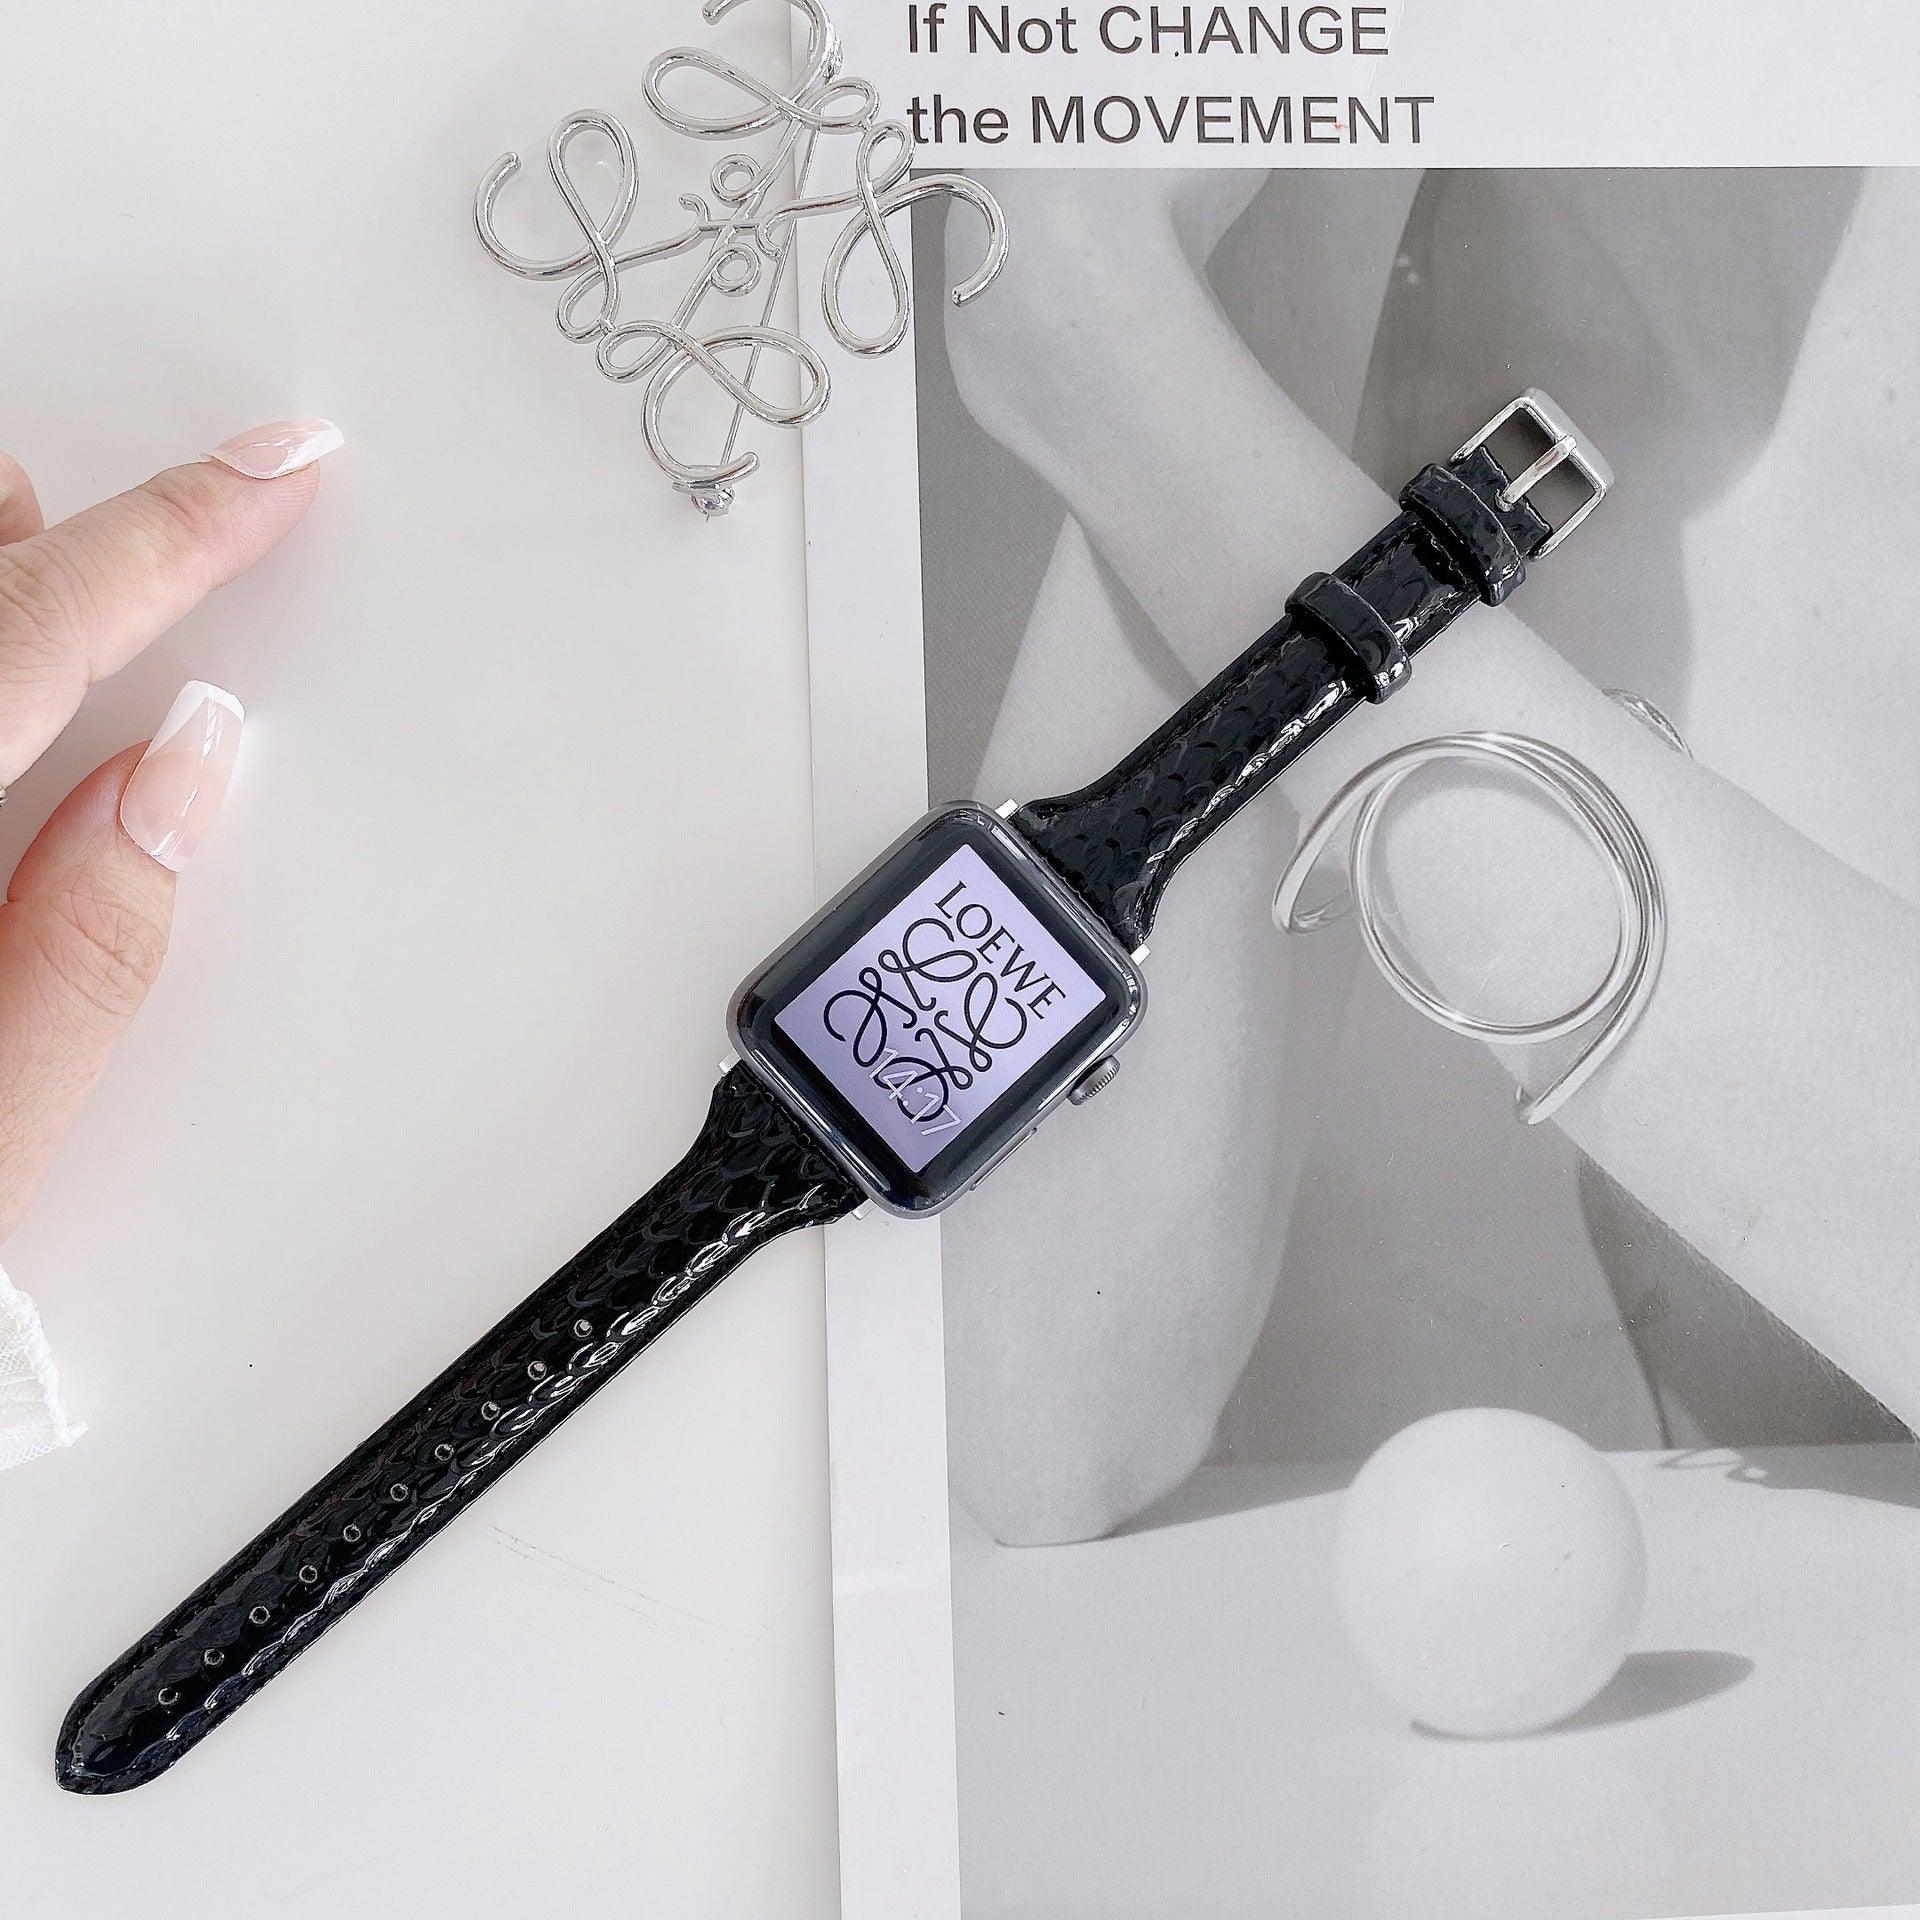 Apple watch バンド 本革  スリム 腕時計 ブラック